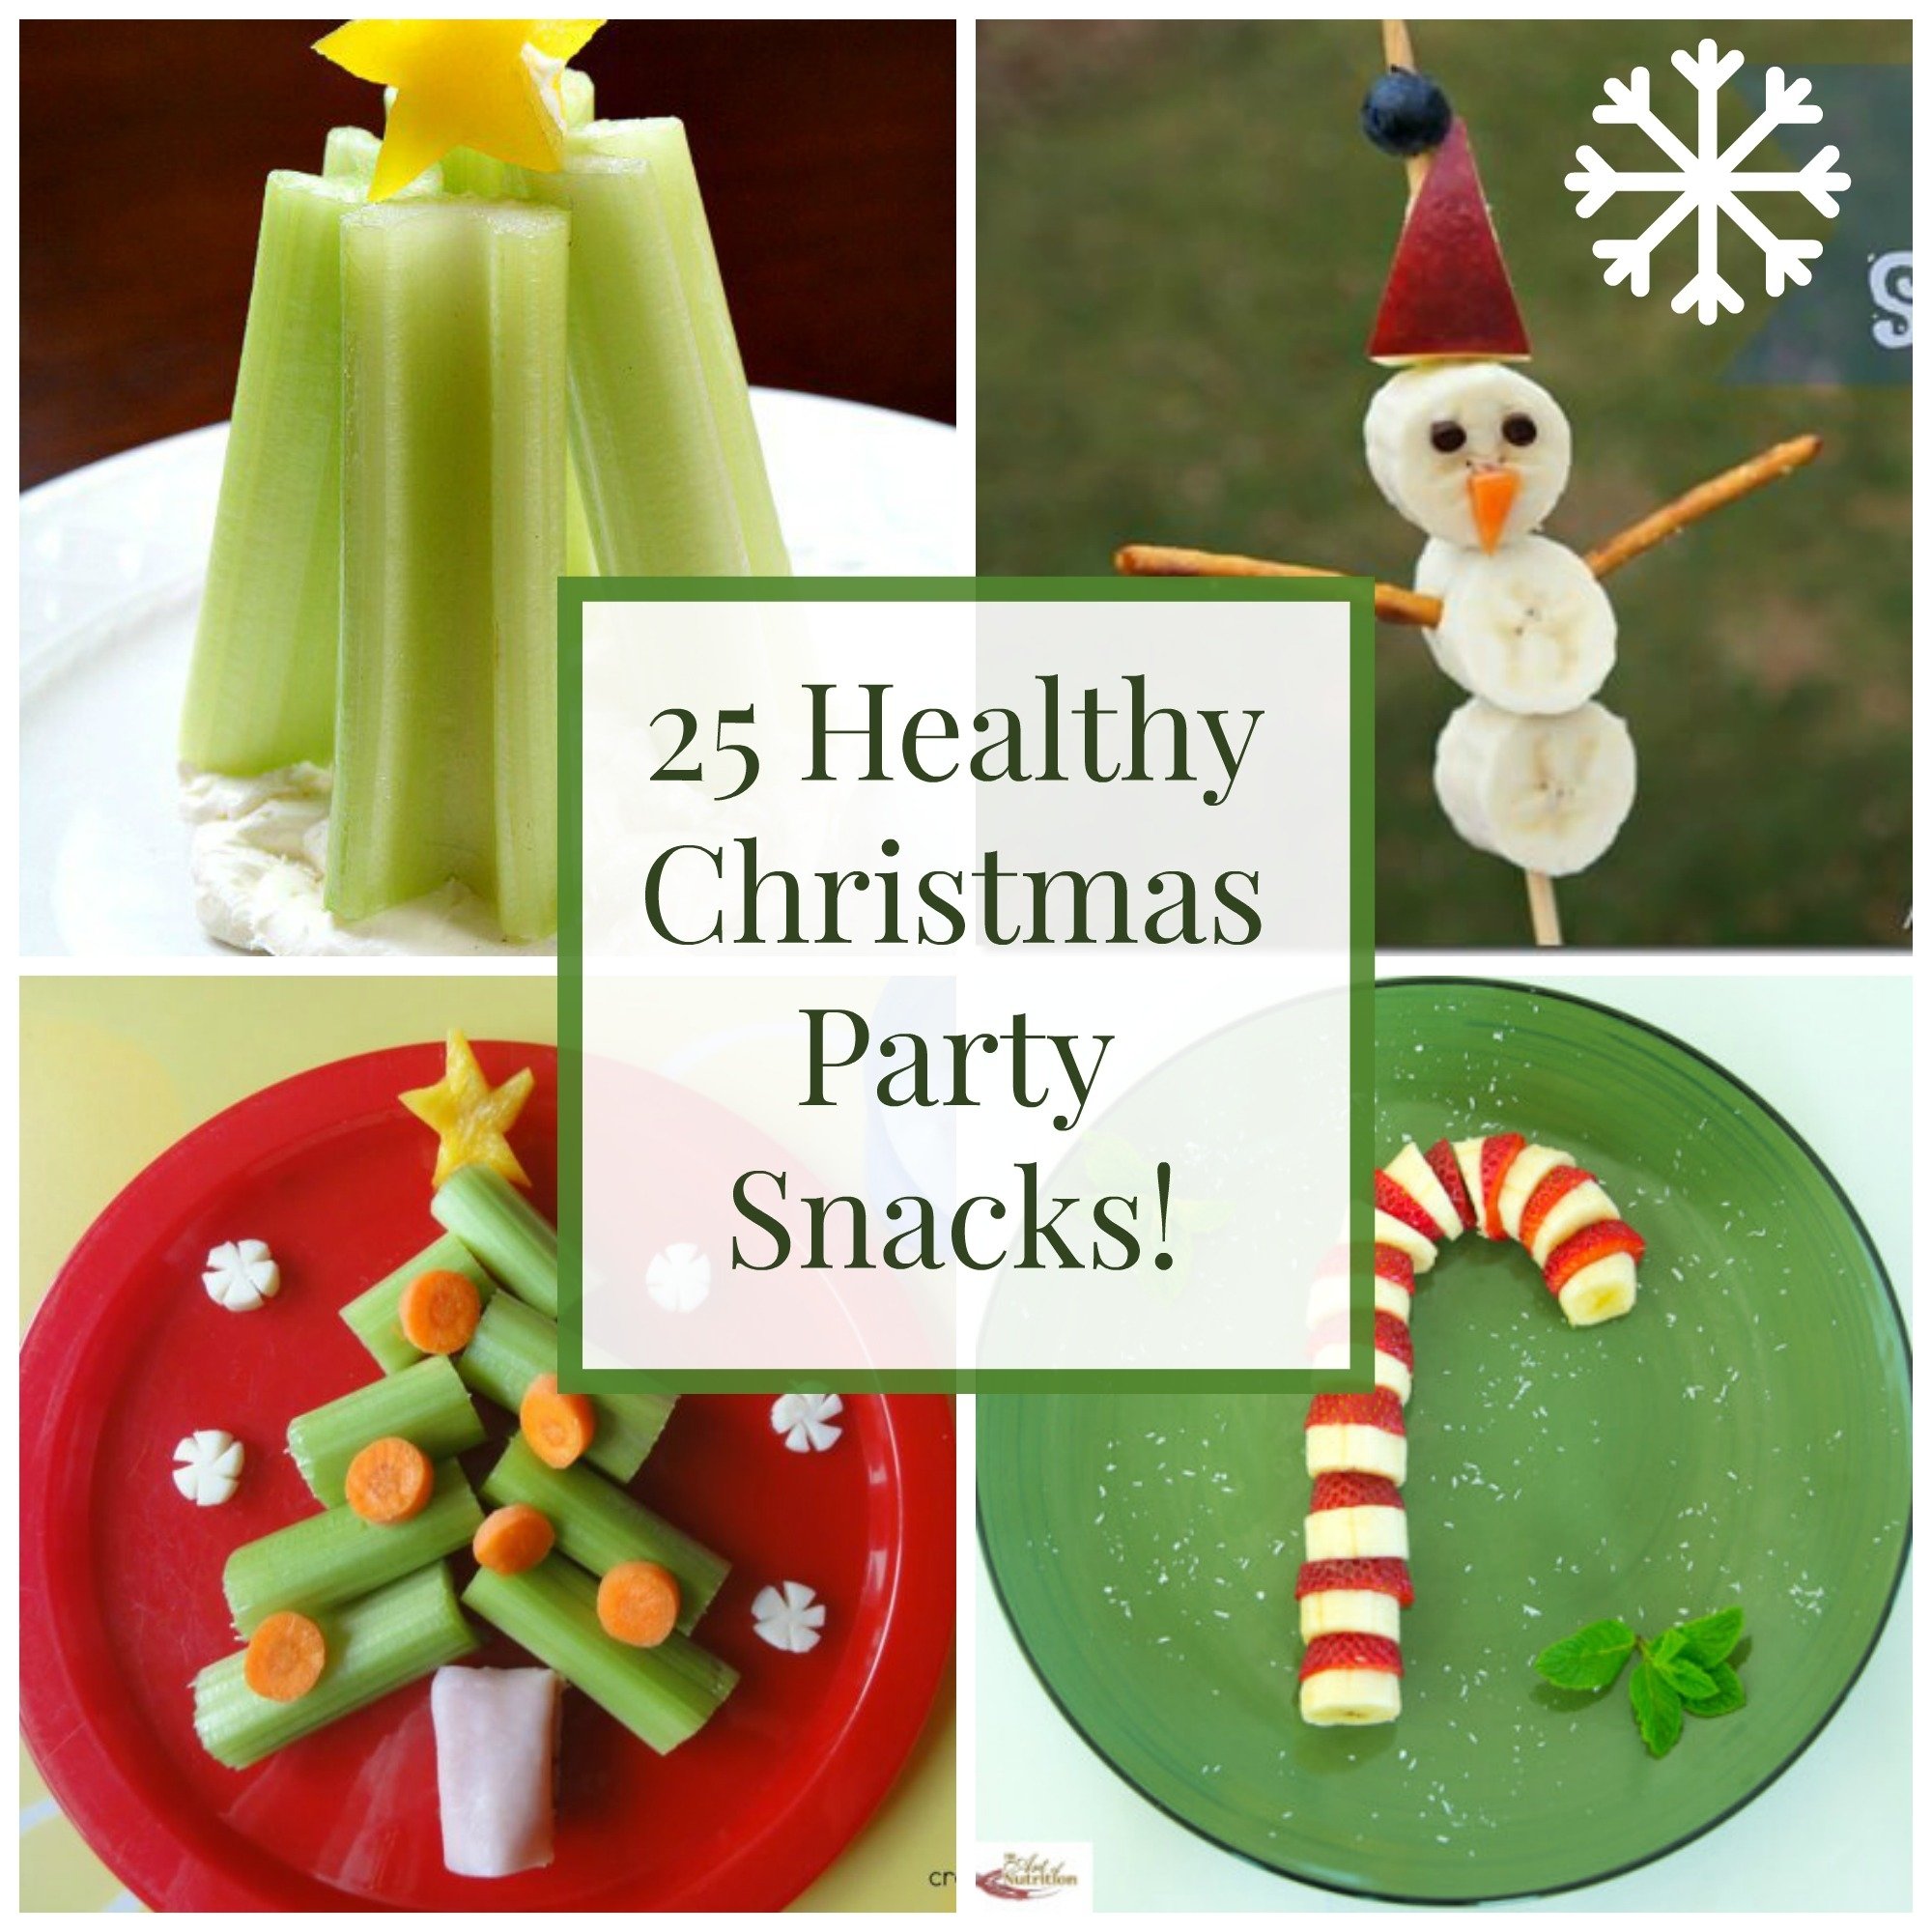 10 Beautiful Christmas Food Ideas For Kids 25 healthy christmas snacks and party foods healthy ideas for kids 4 2022